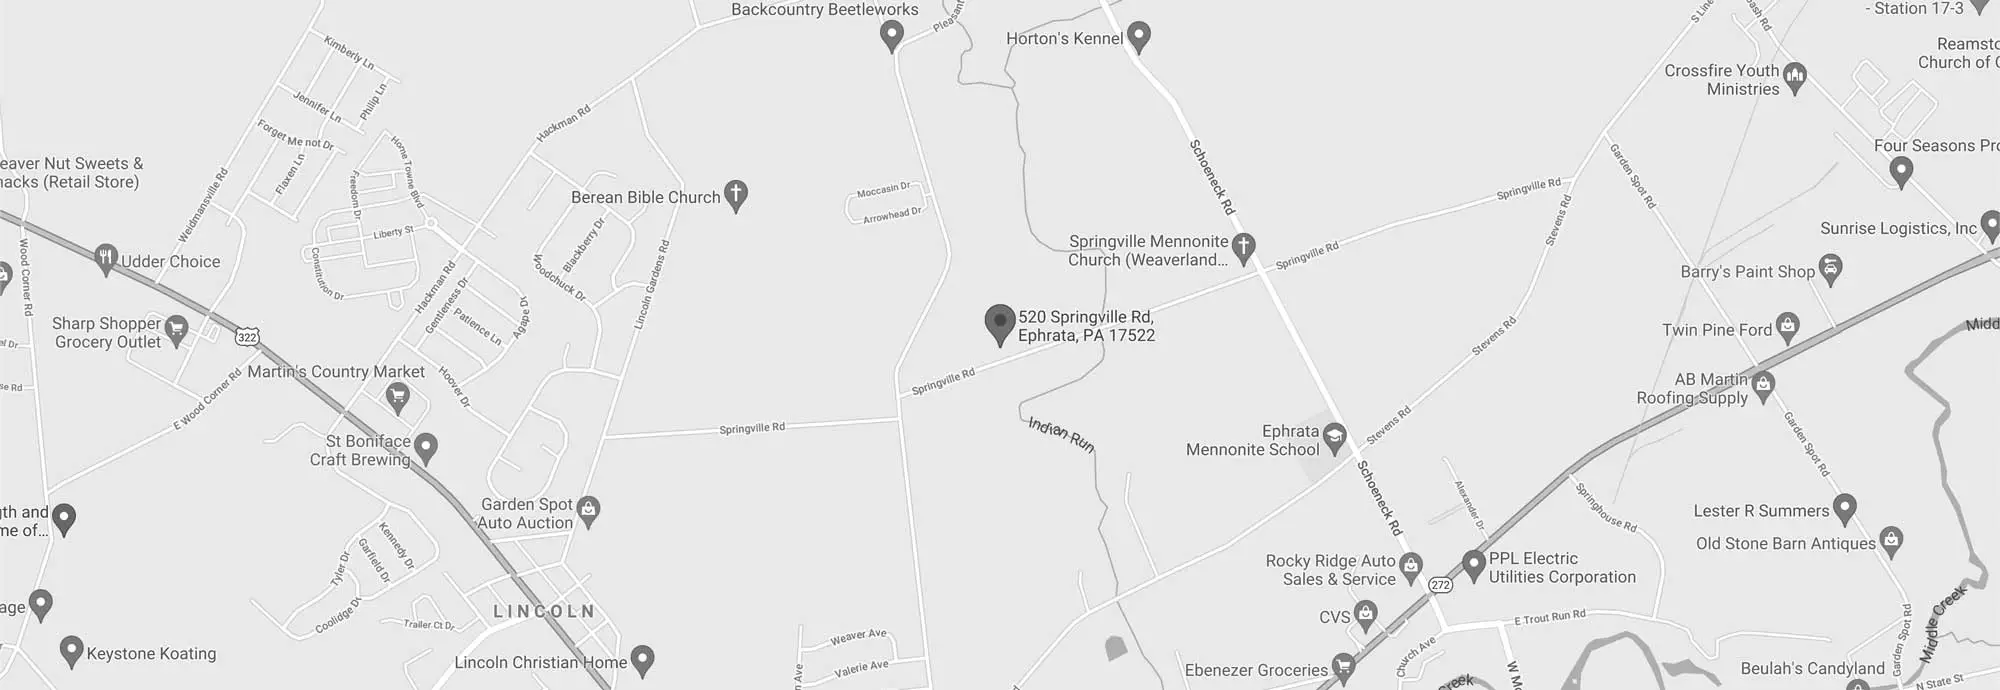 map showing Joy Christian fellowship's location